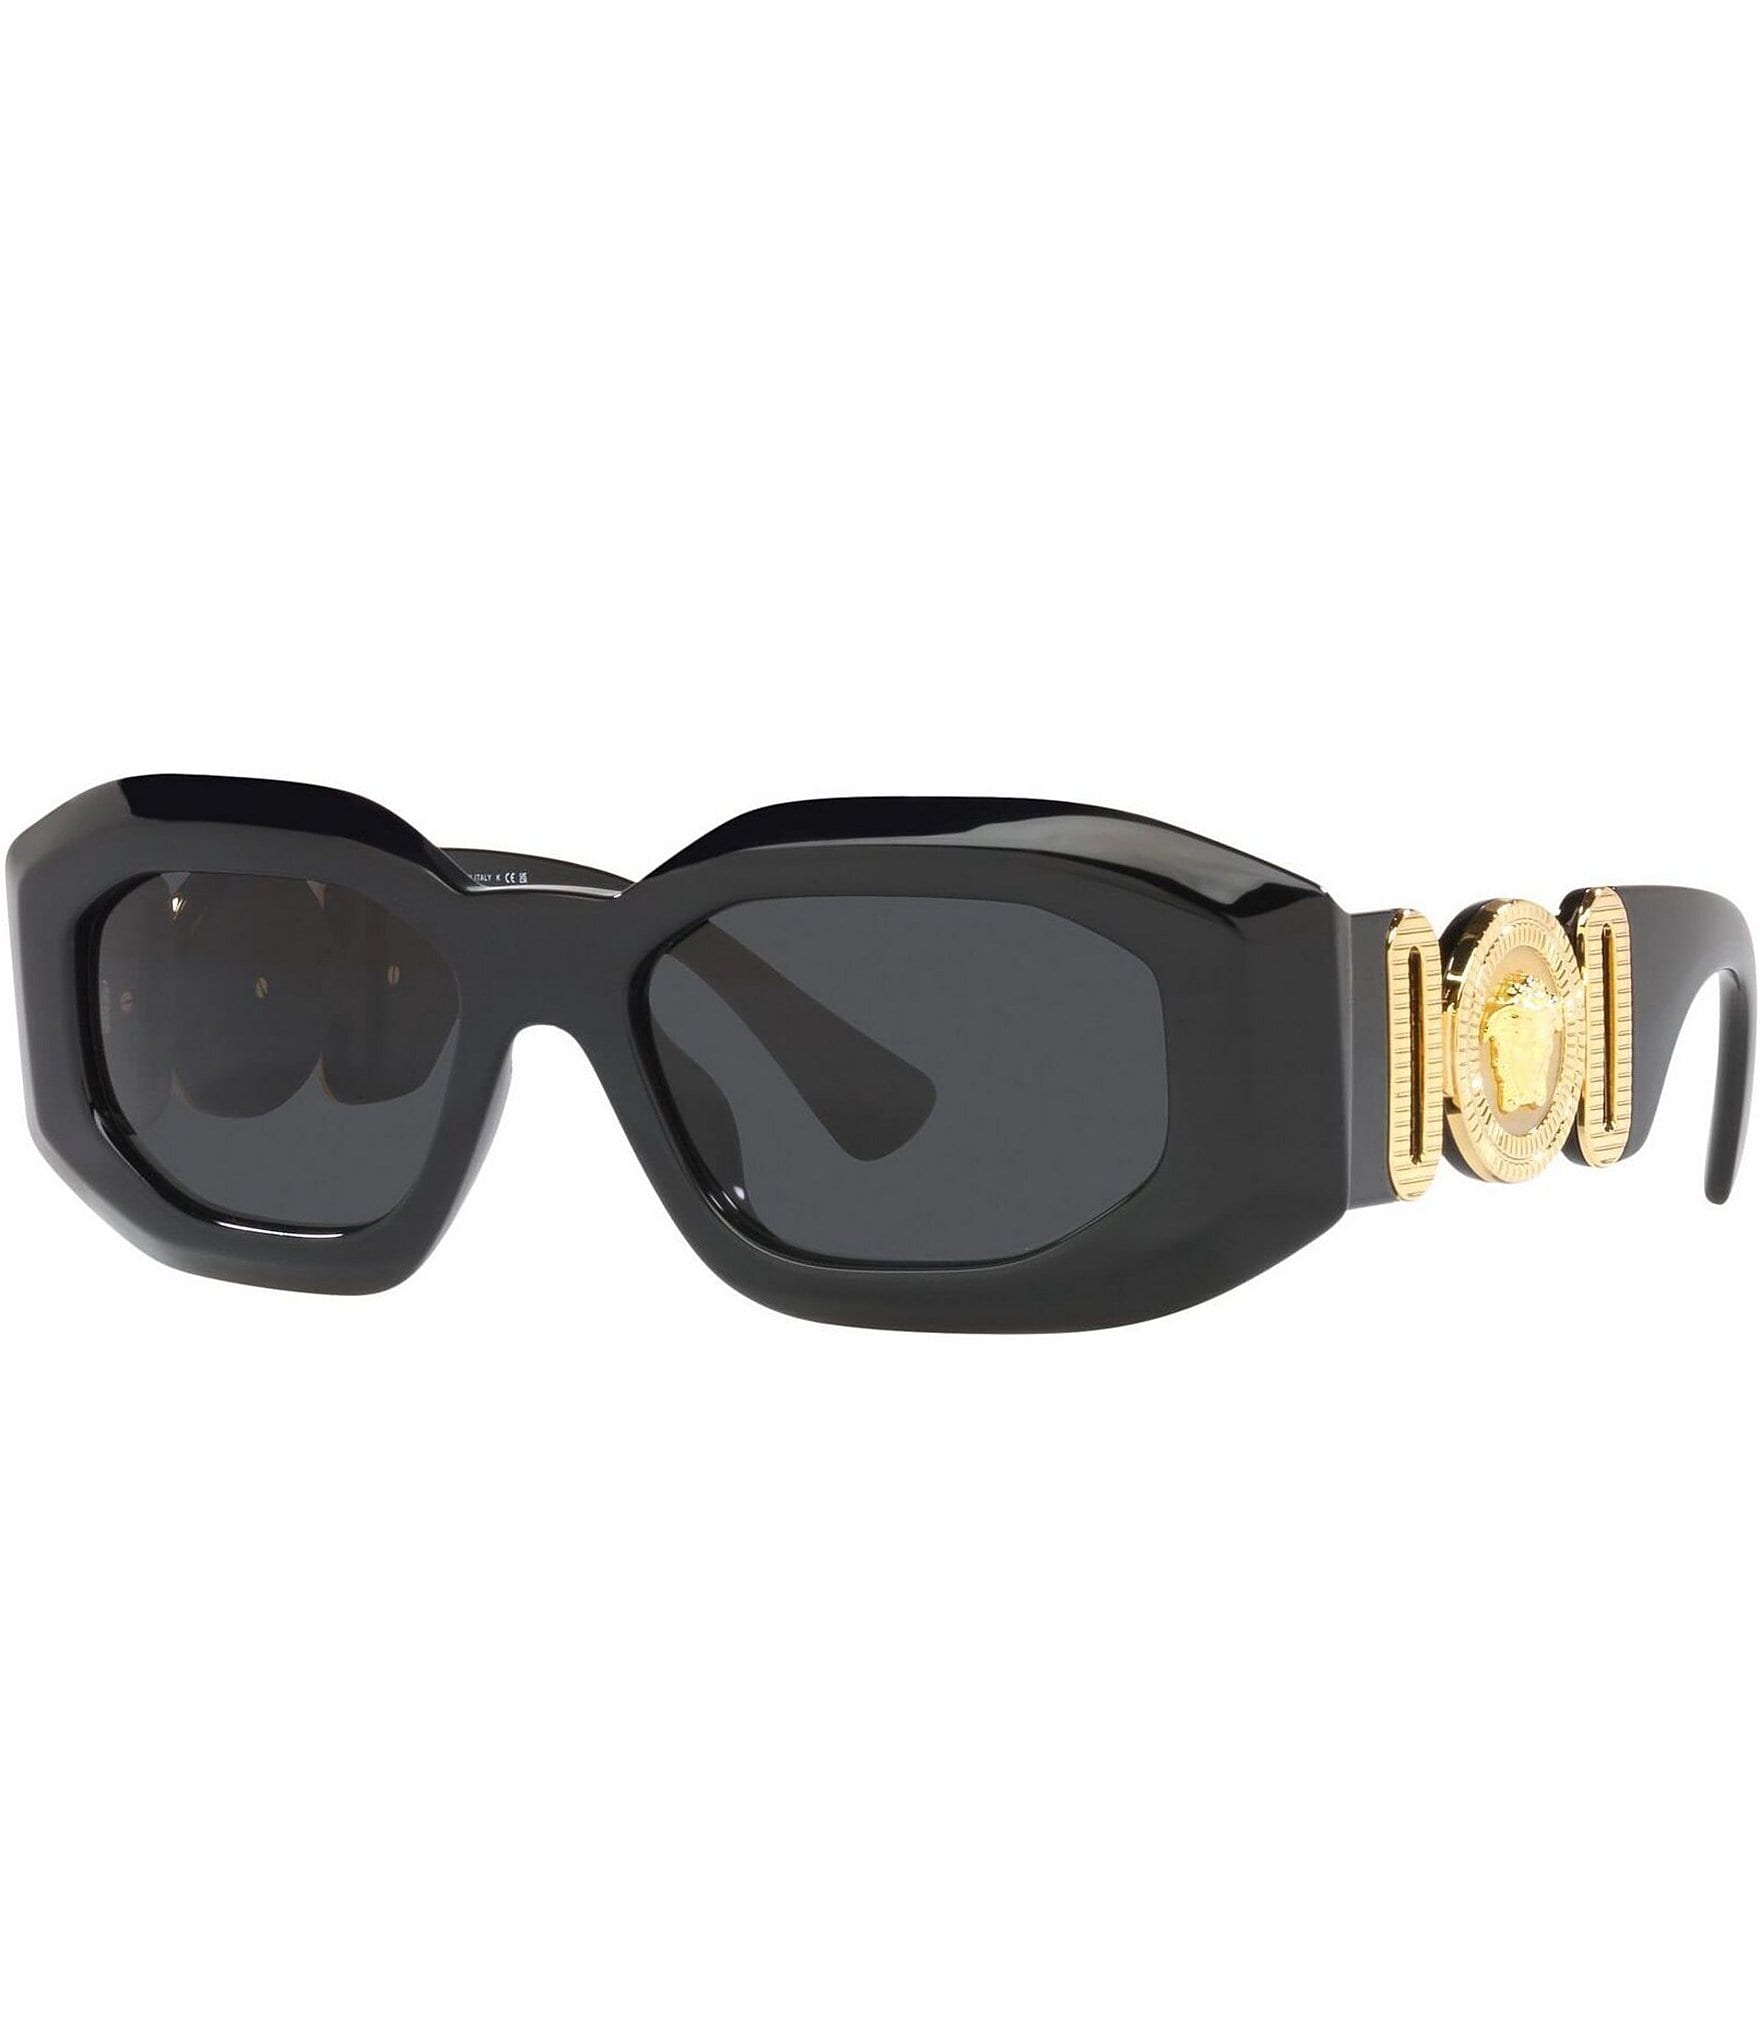 Balenciaga Men's Sunglasses: The Epitome of Luxury and Style